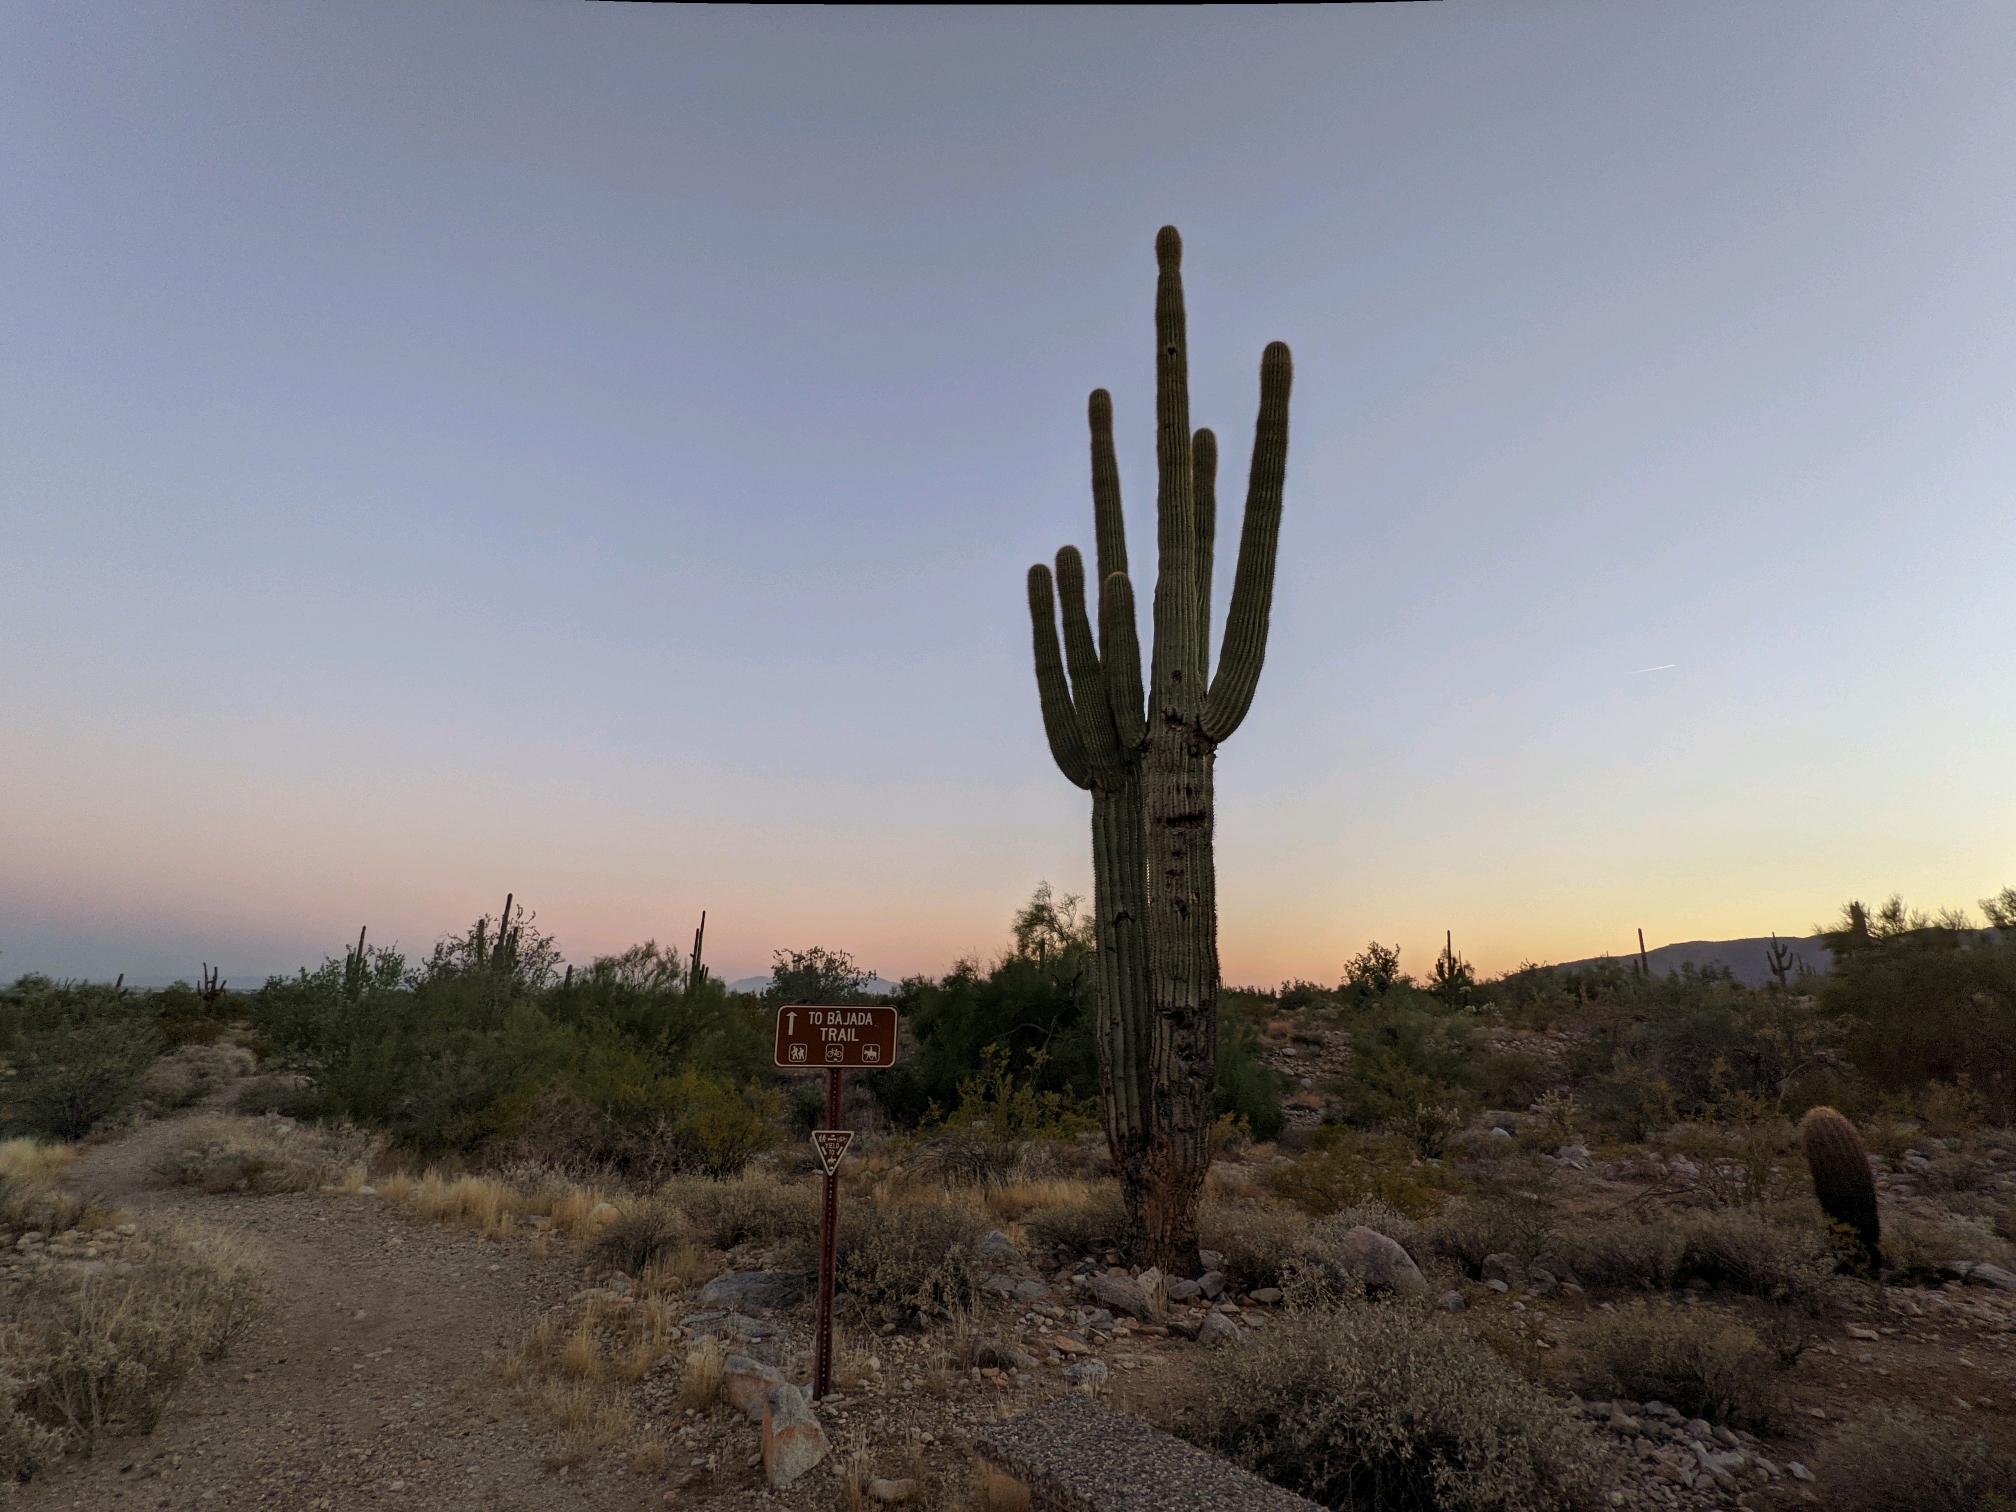 Sign for Bajada Trail next to a saguaro cactus at White Tank Mountain Regional Park